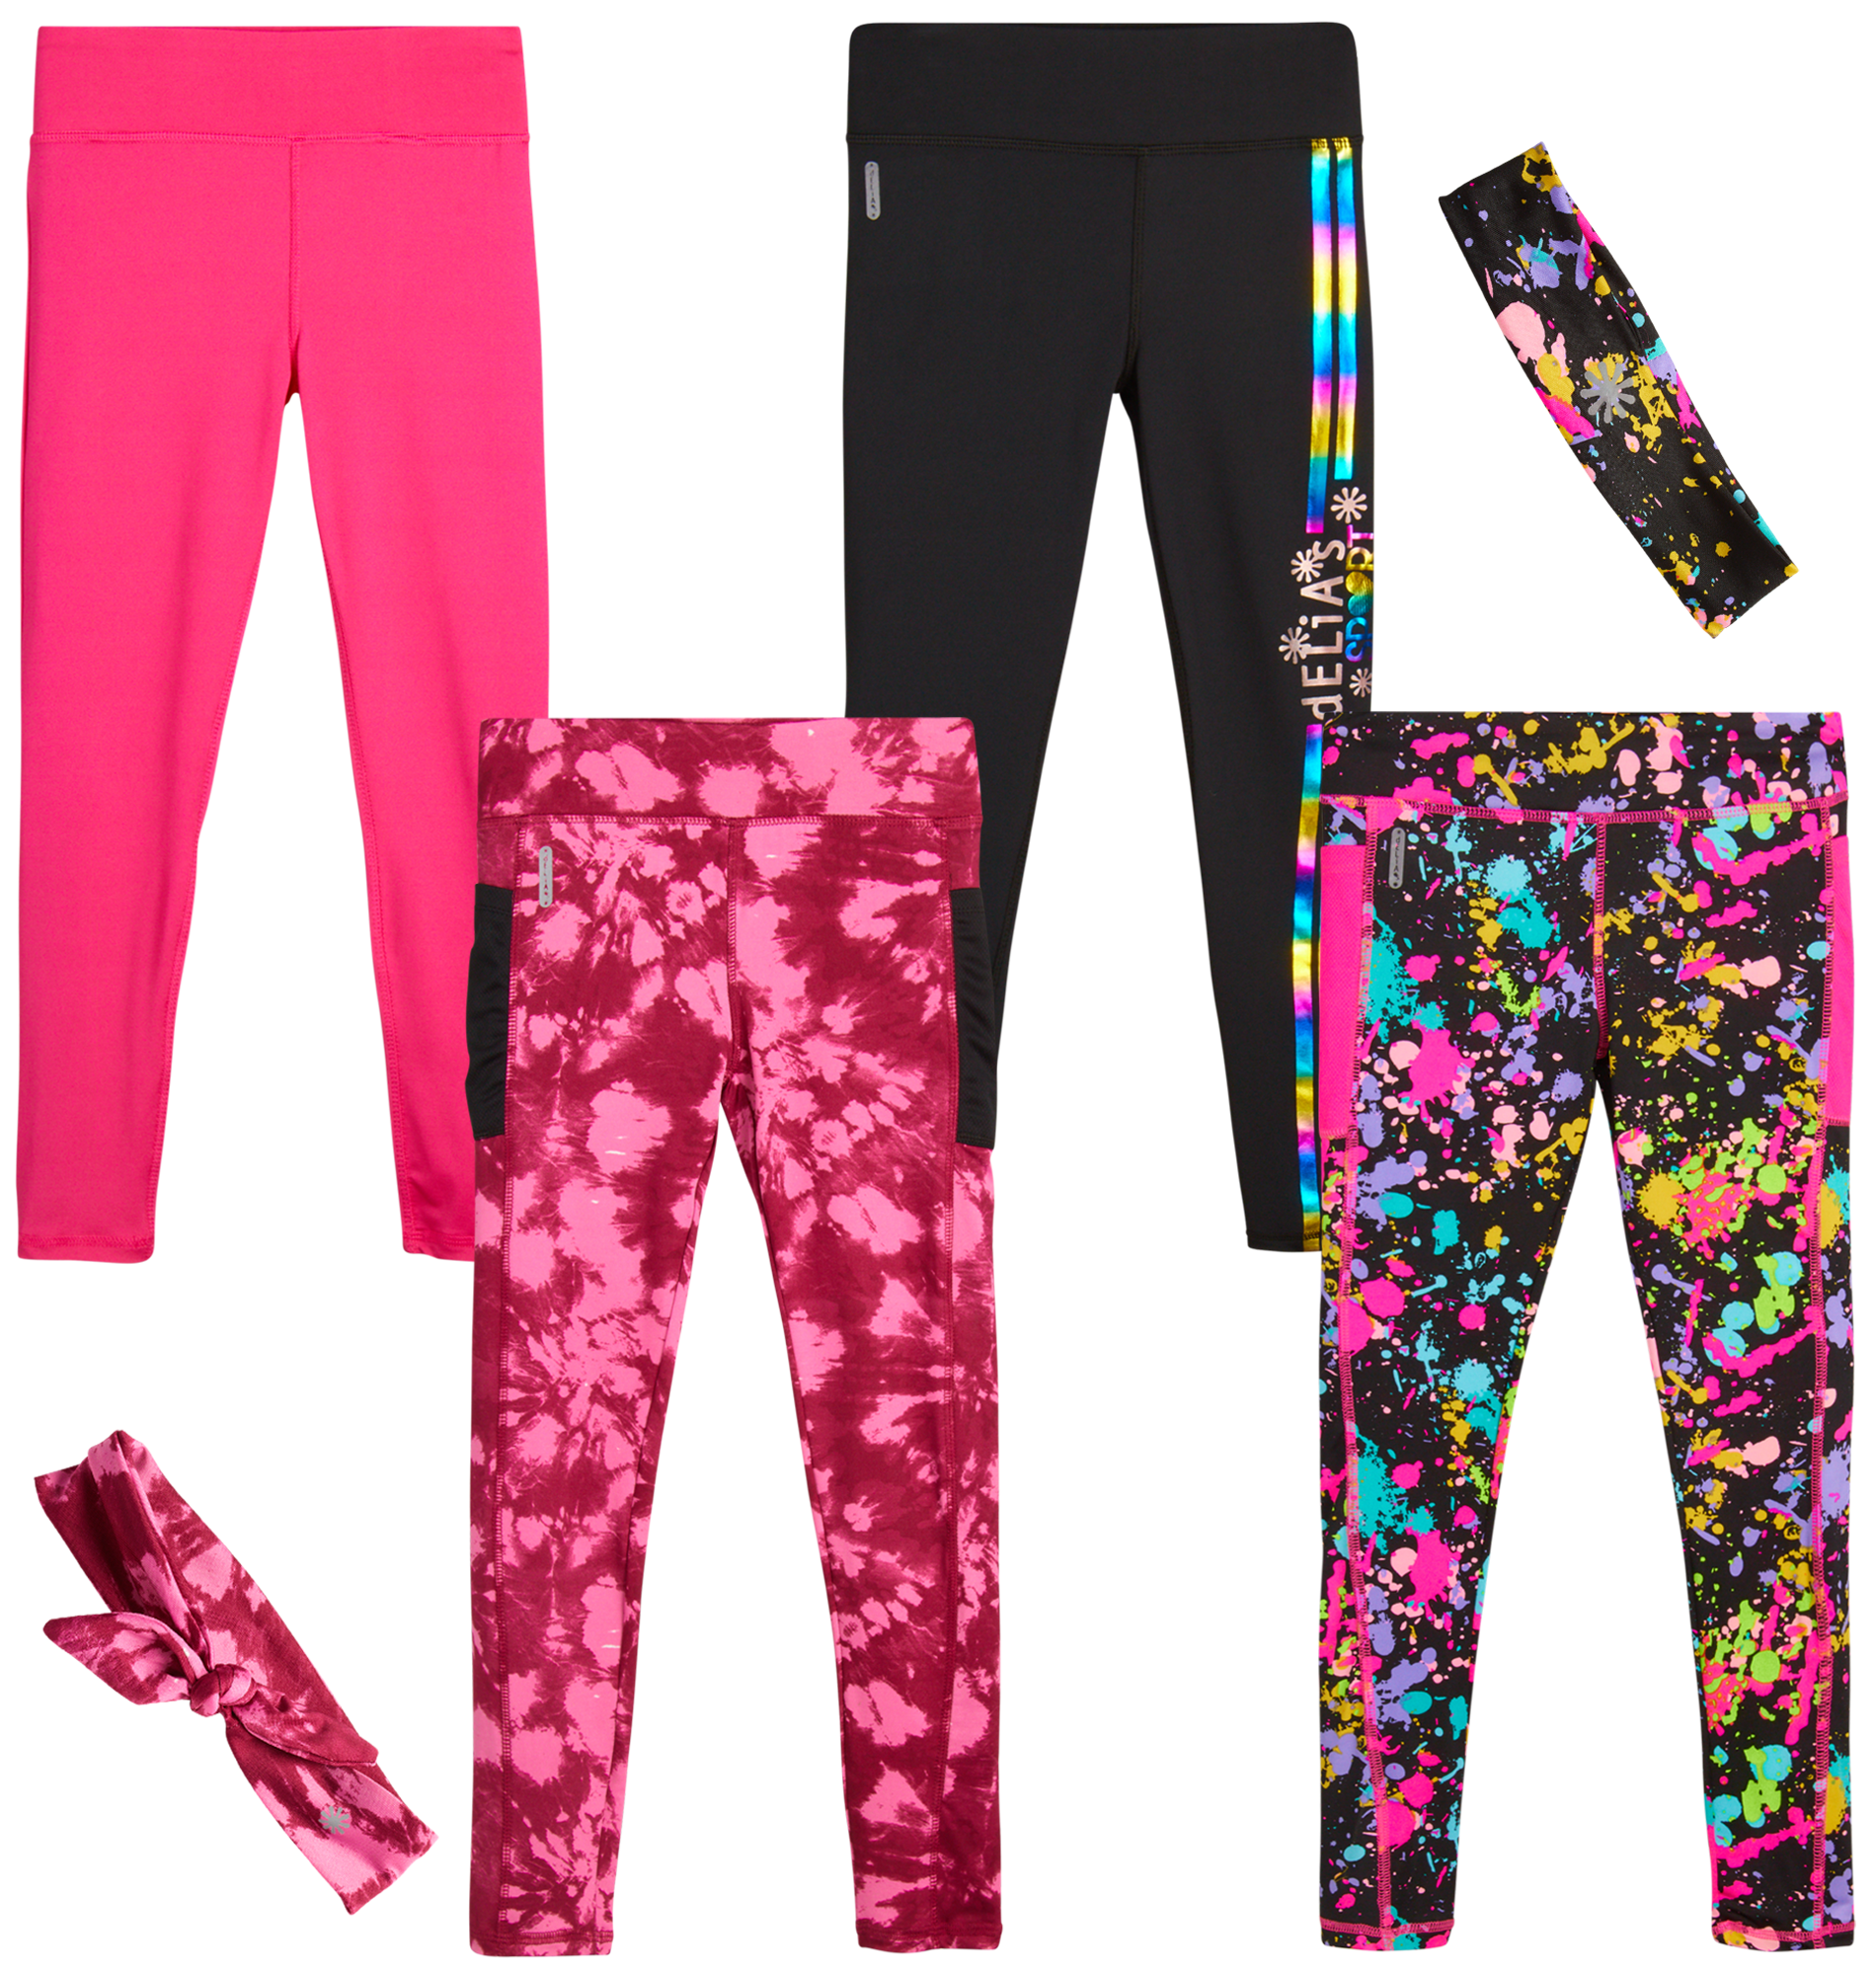 LEE Girls Leggings 3-Pack, Assorted Colors